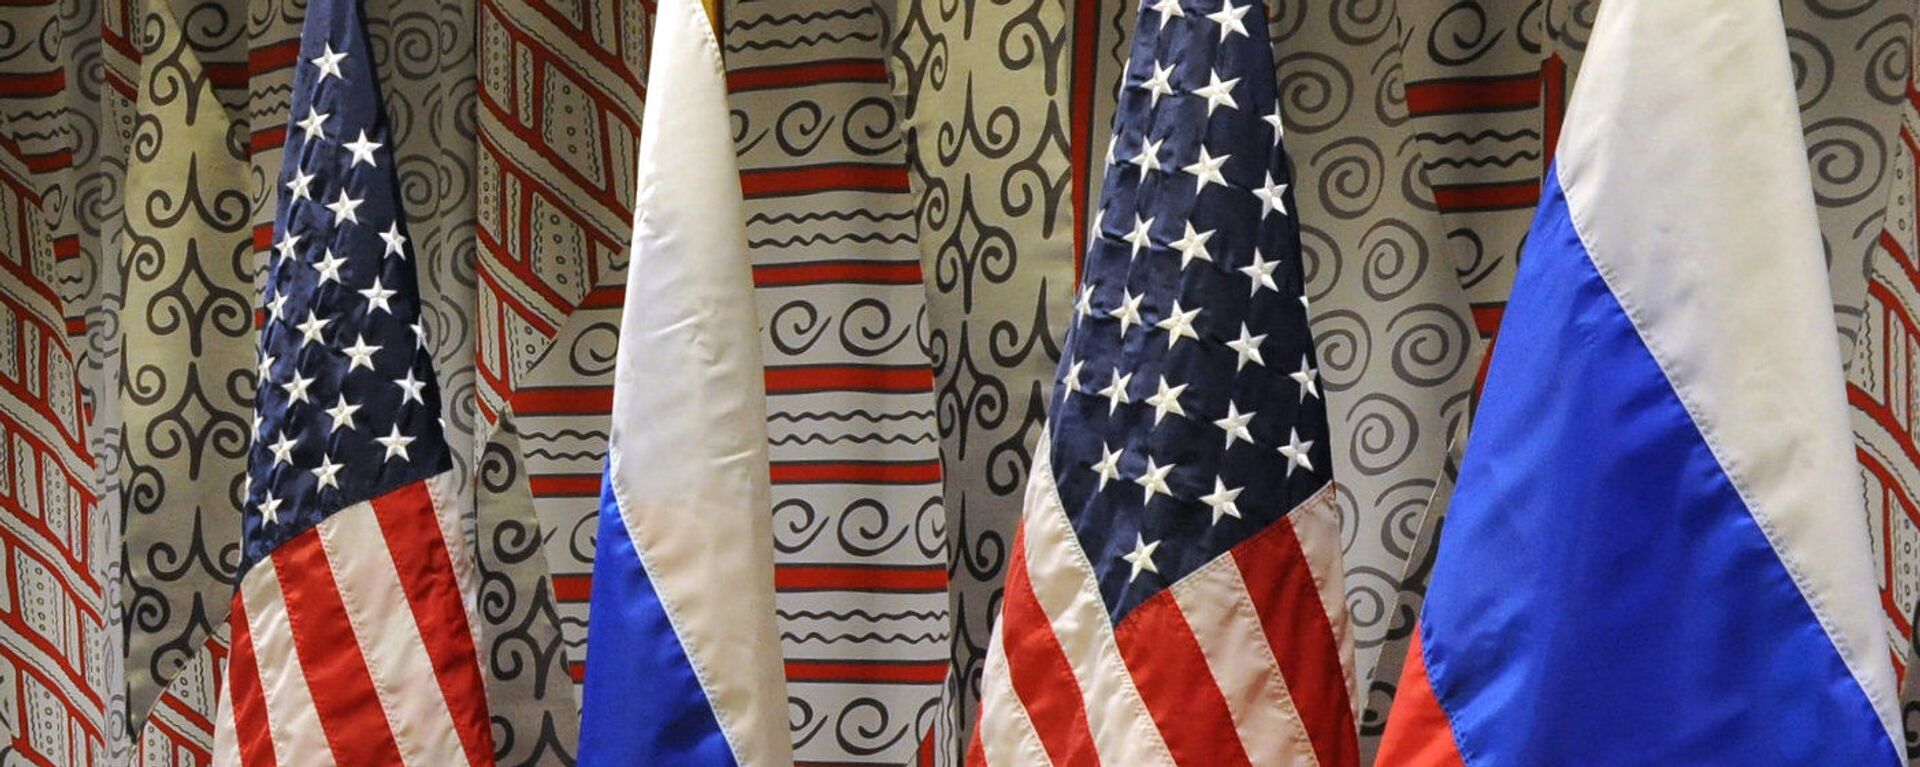 Флаги России и США - Sputnik Latvija, 1920, 15.06.2021